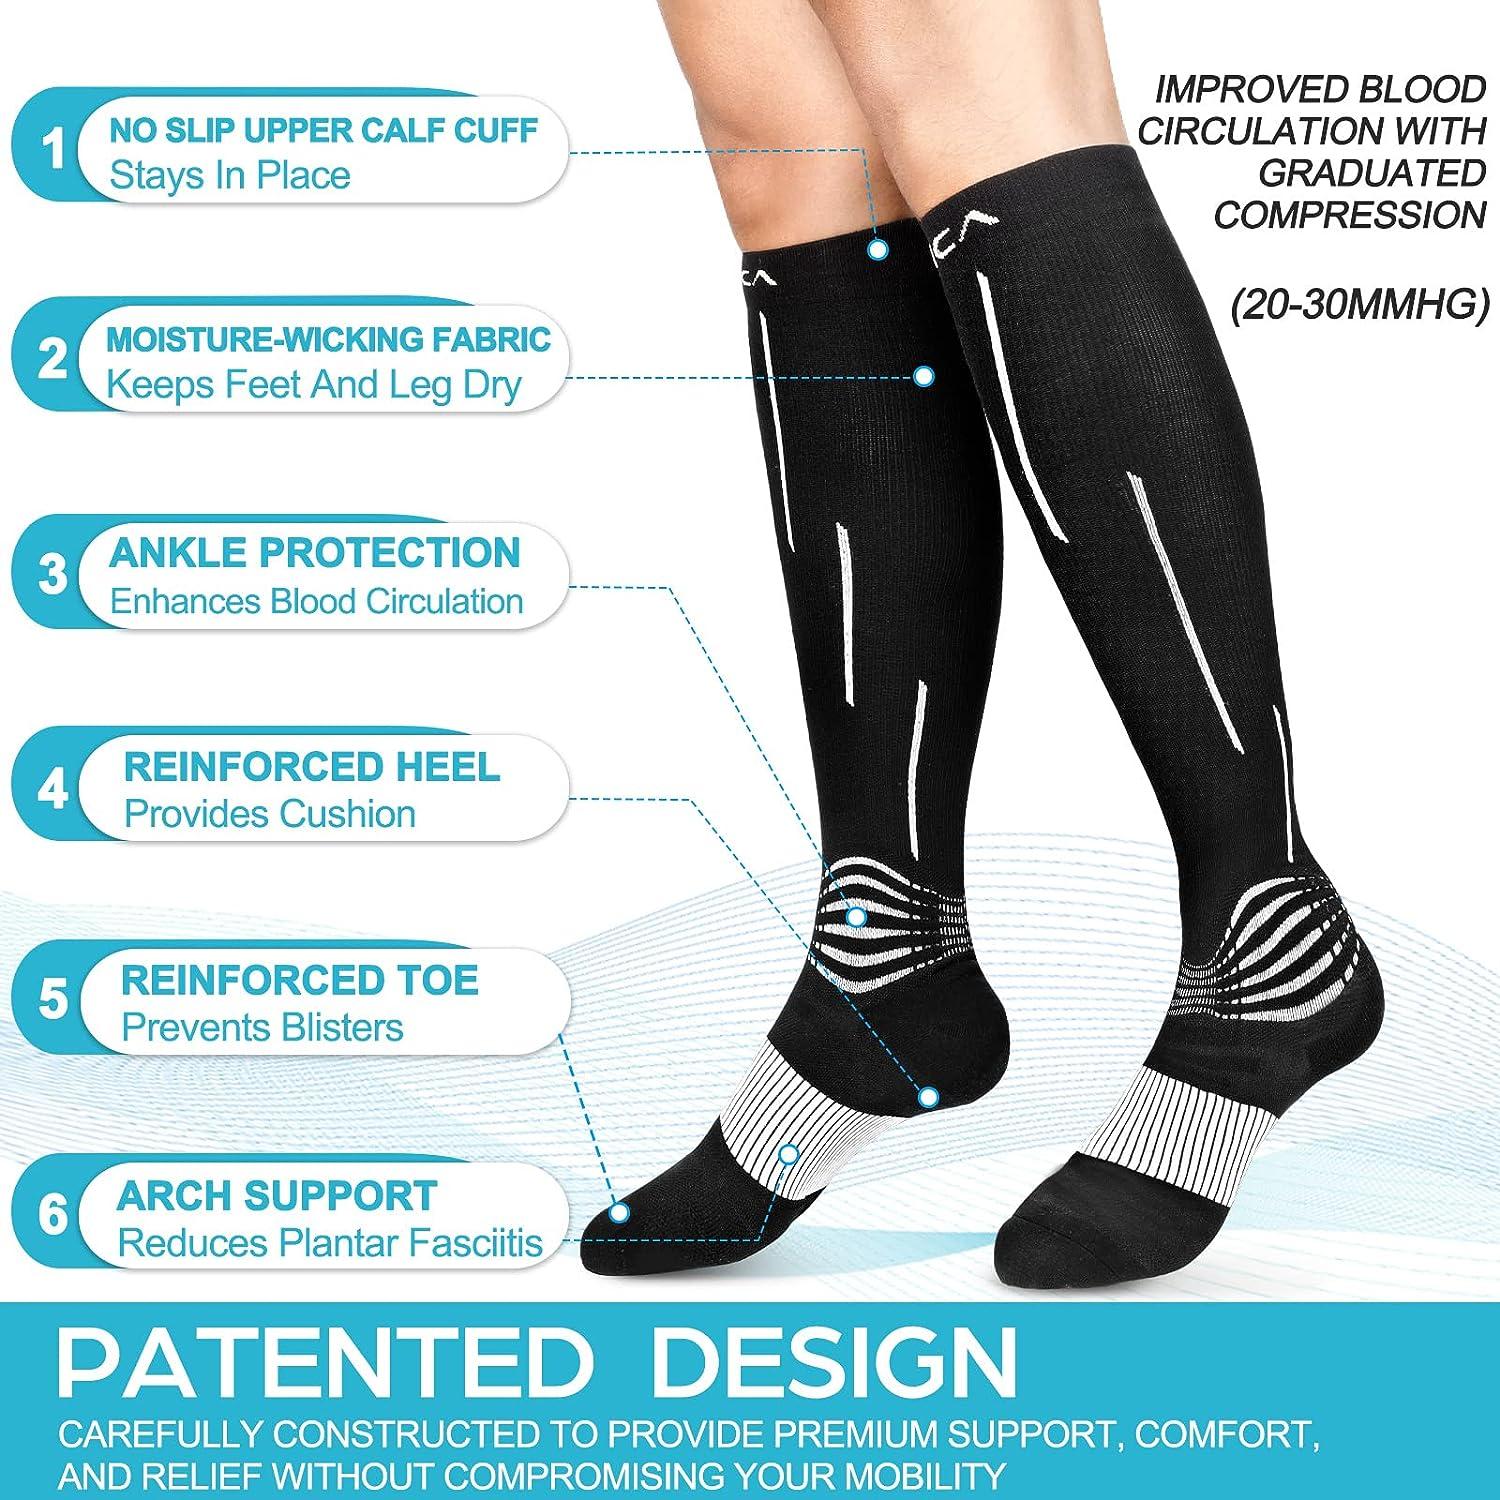 NEENCA Leg Compression Sleeve, Calf Support Sleeve, Leg Pain